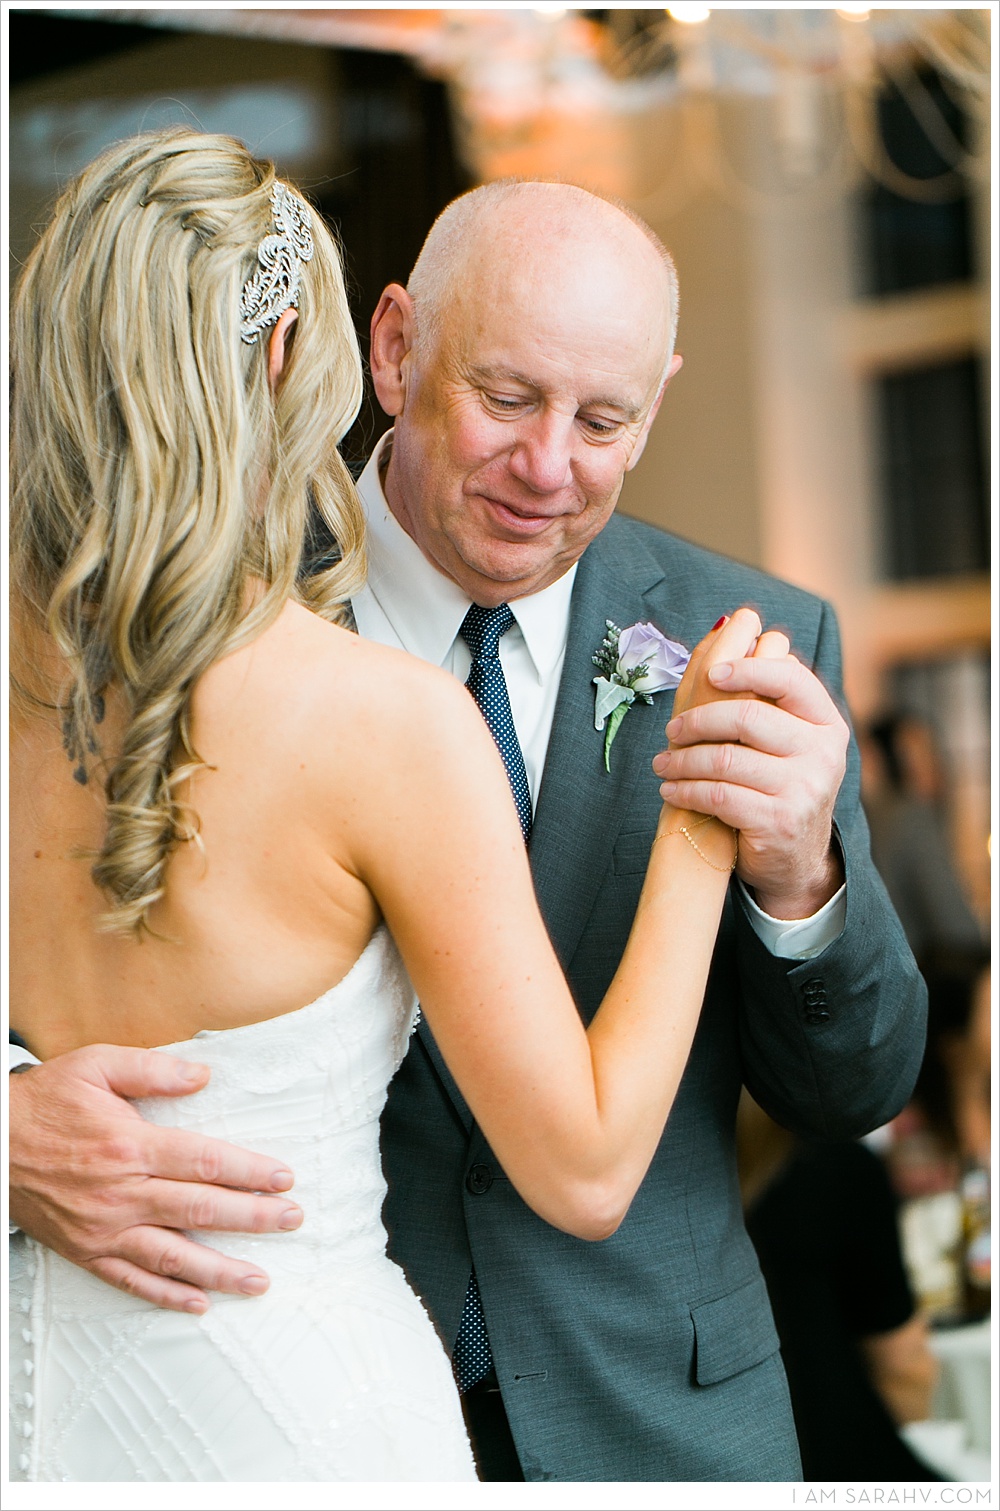 Alden Castle Wedding Photographer Boston Massachusetts / I AM SARAH V Photography